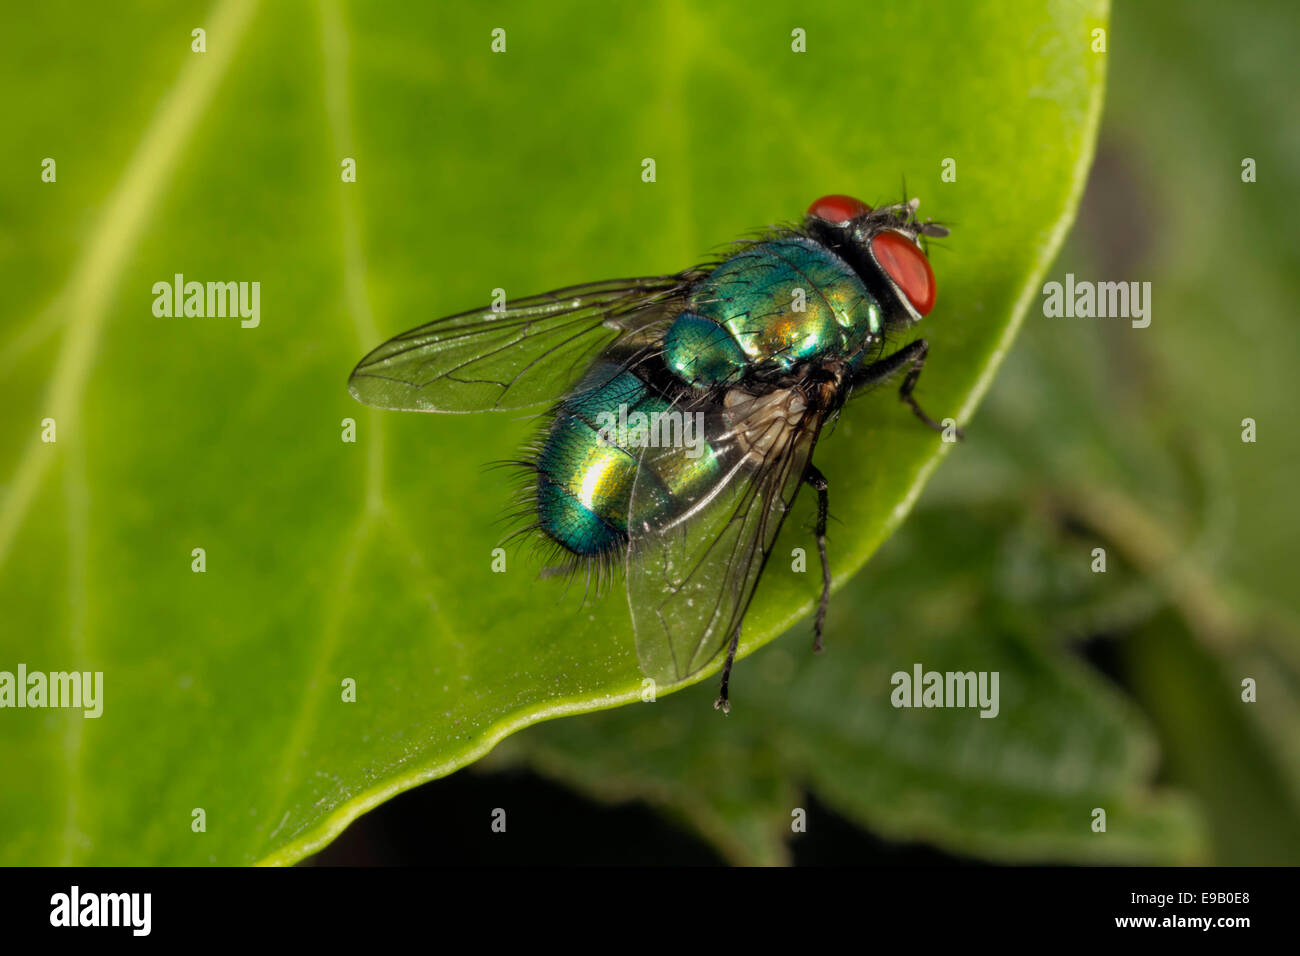 Bluebottle fly (Calliphora vomitoria), Wales, United Kingdom Stock Photo